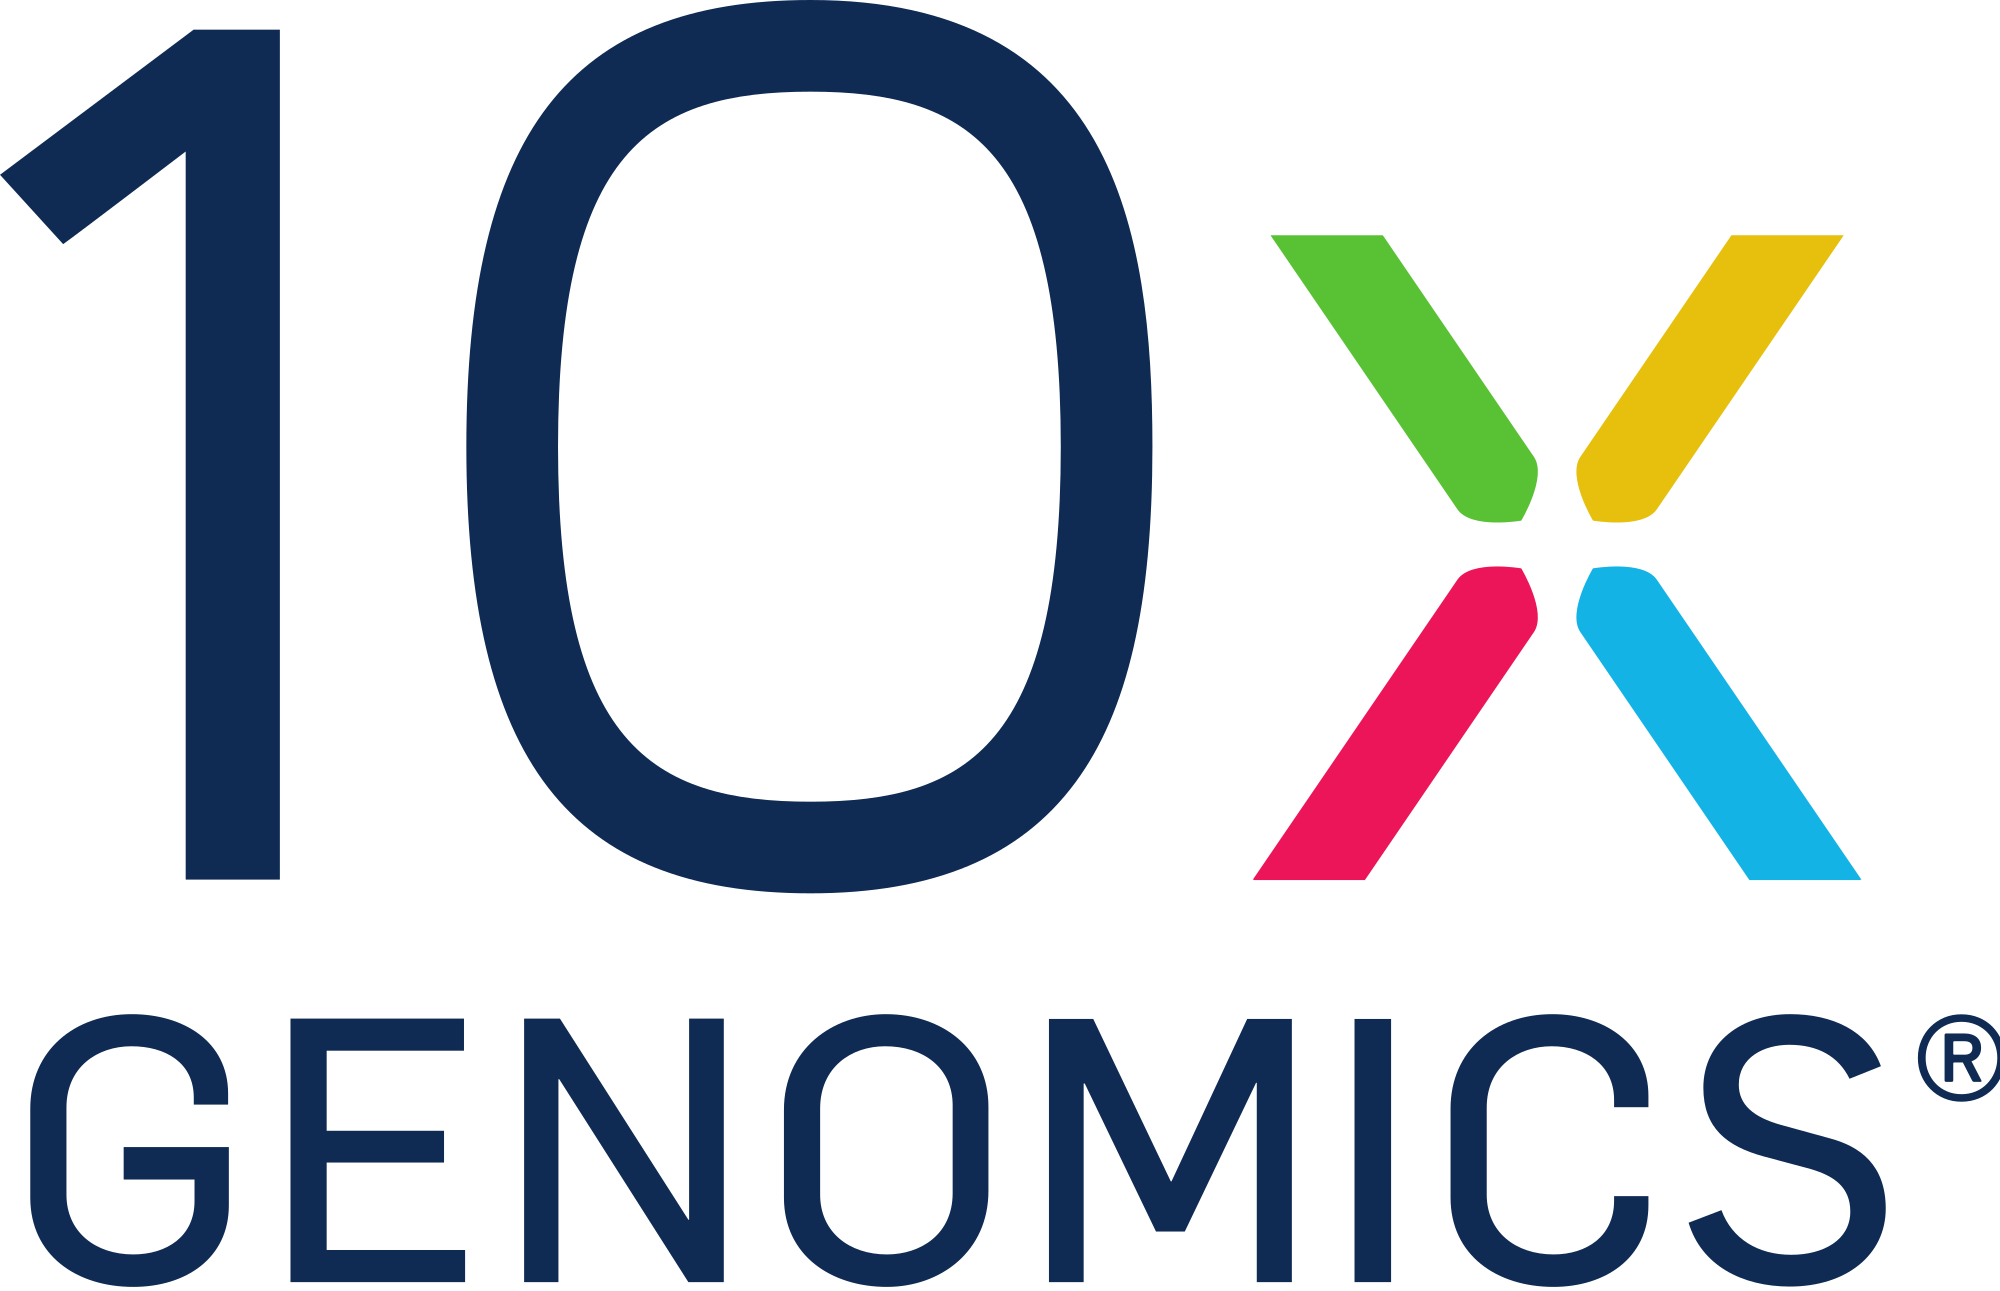 2018-09/2000px-10x_genomics_logo.svg.png